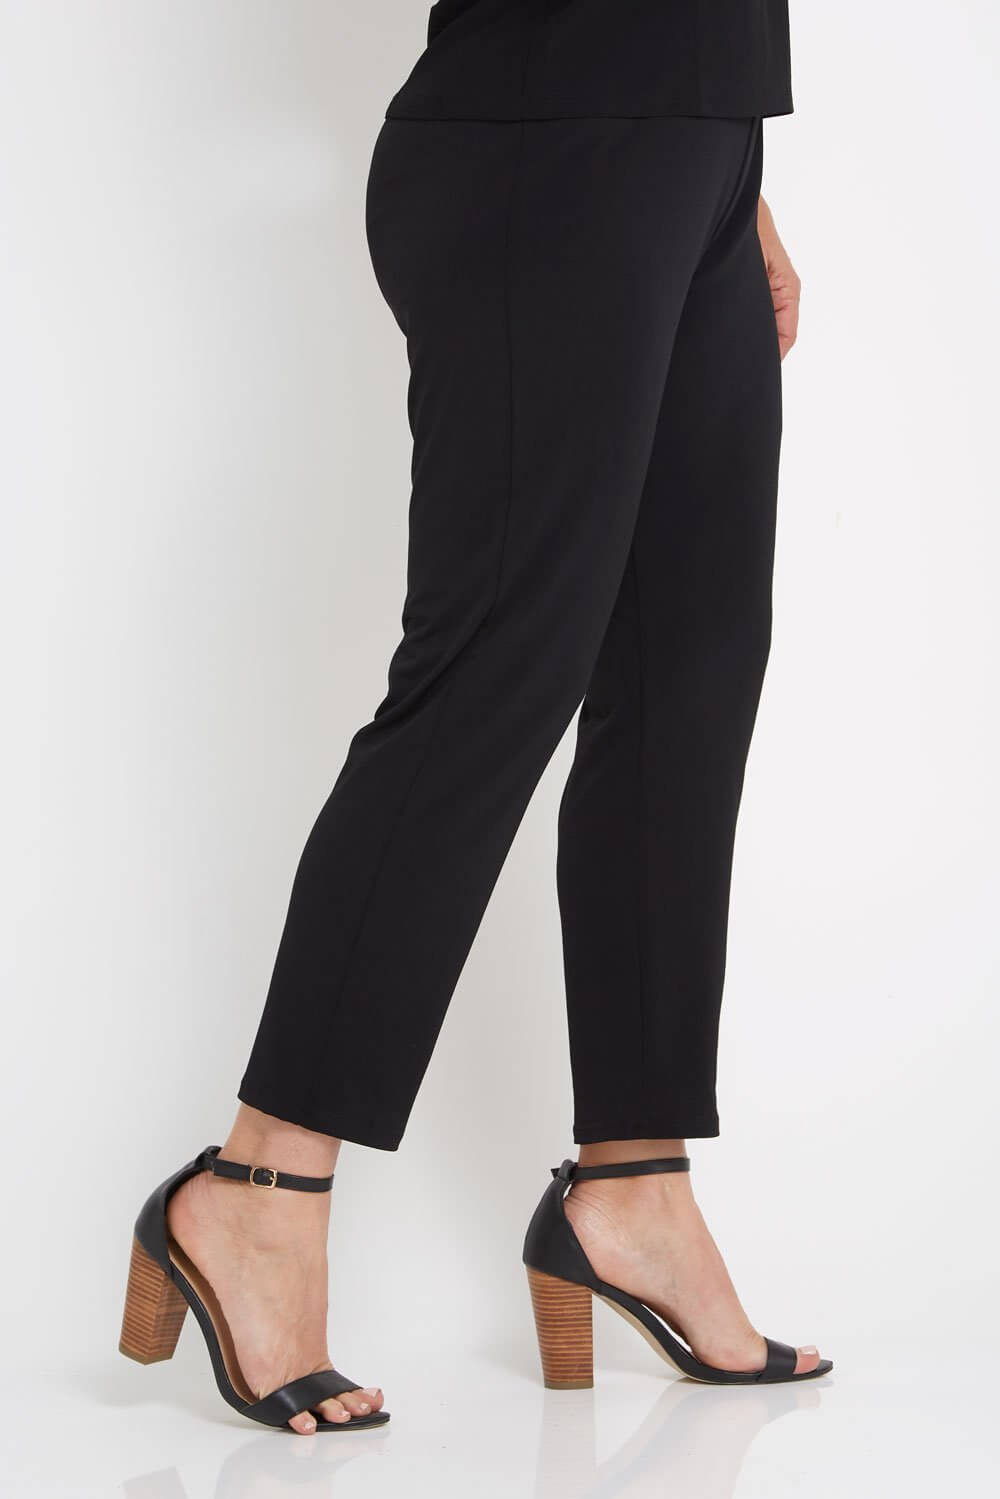 TULO Fashion | Gianna Petite Pants - Black | Australian Made – Tulio